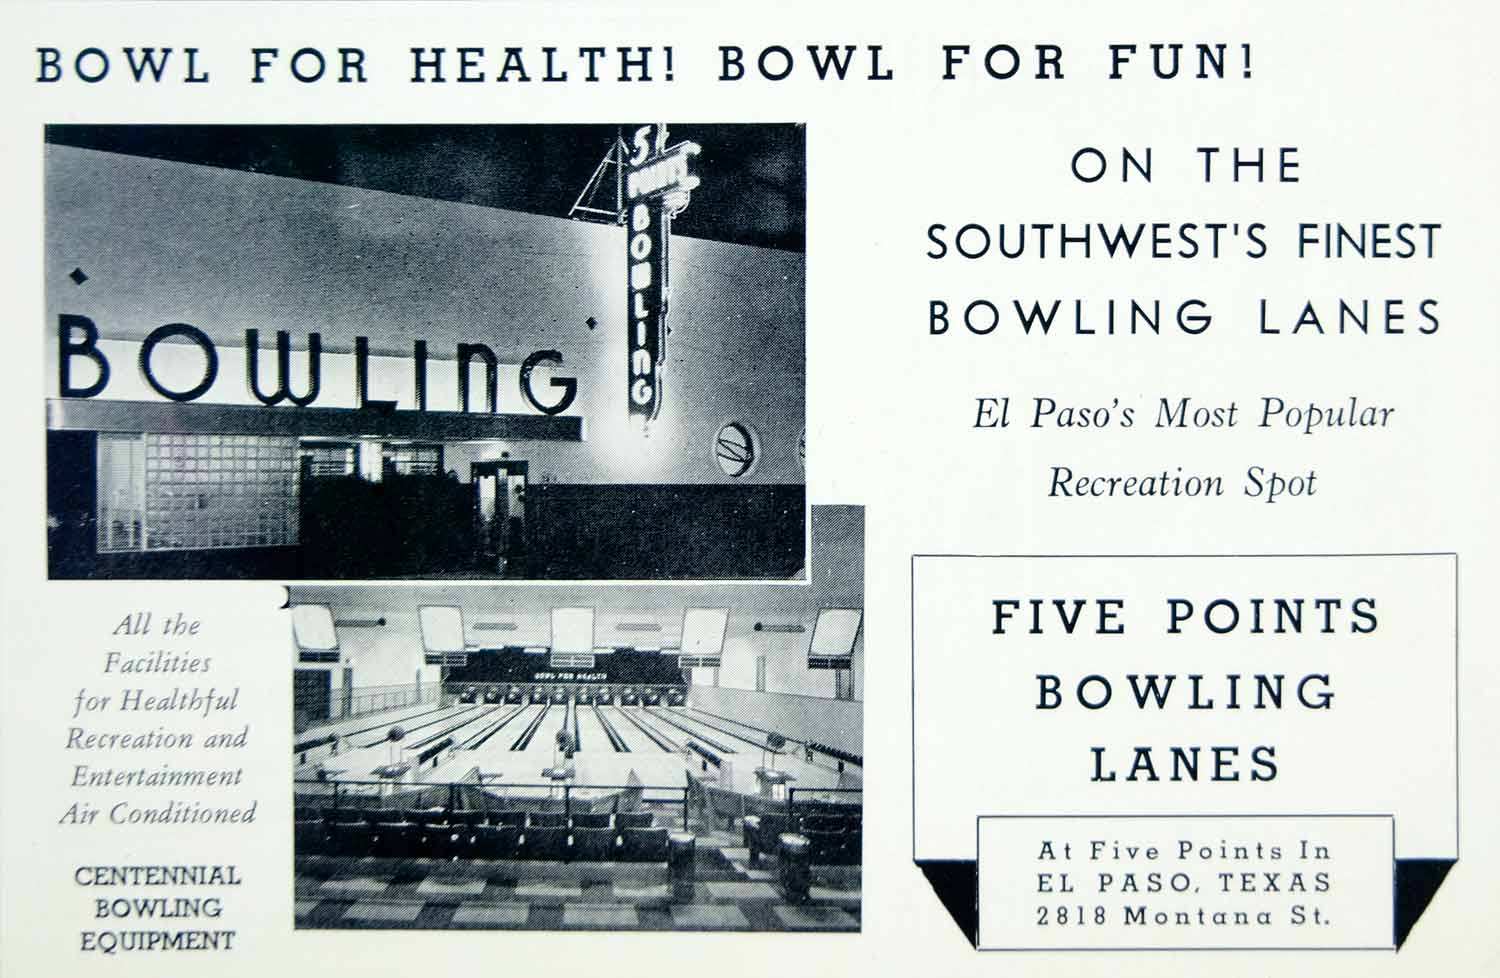 1941 Ad El Paso Bowling Five Points 2818 Montana St. Lanes Healthful YAH1